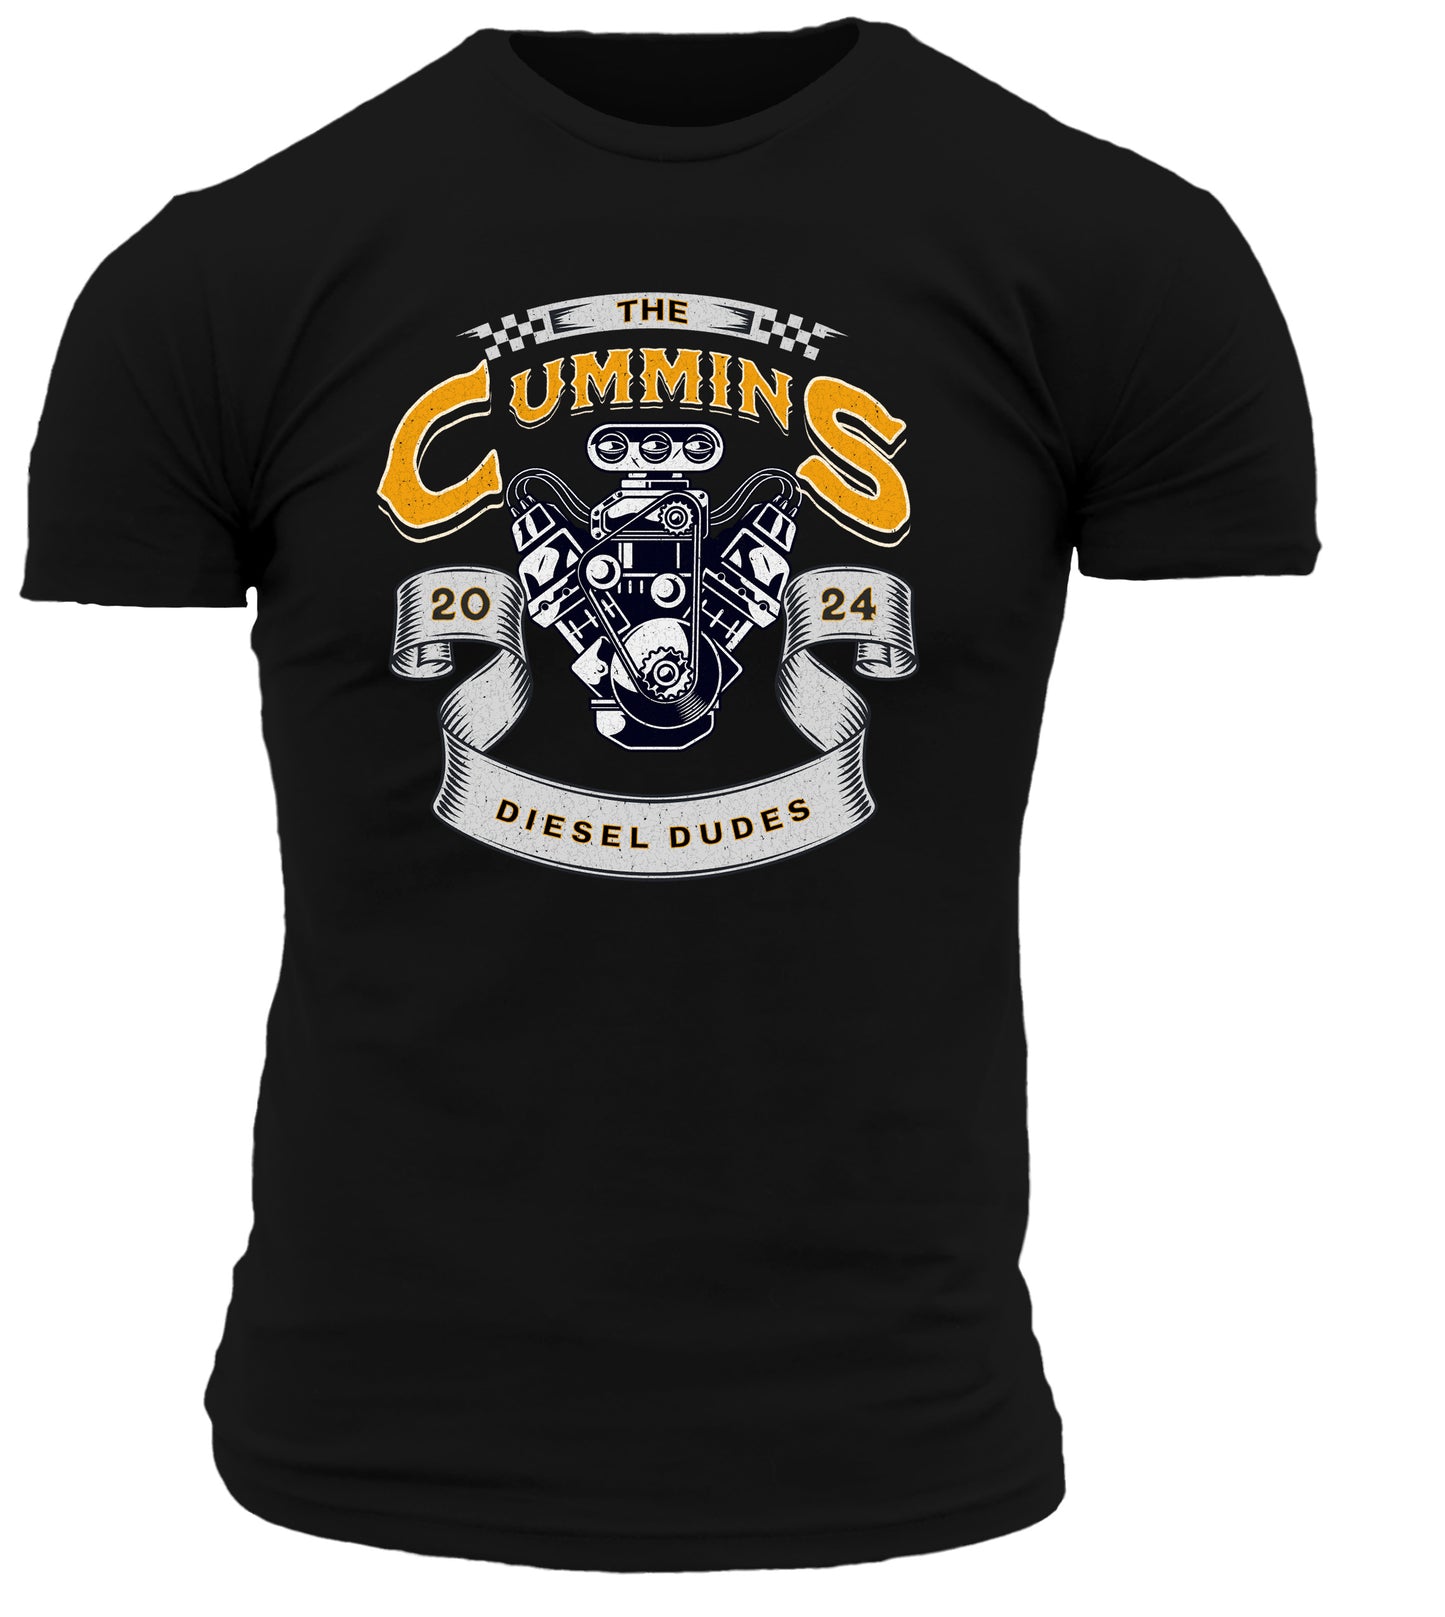 Cummins Engine T-Shirt